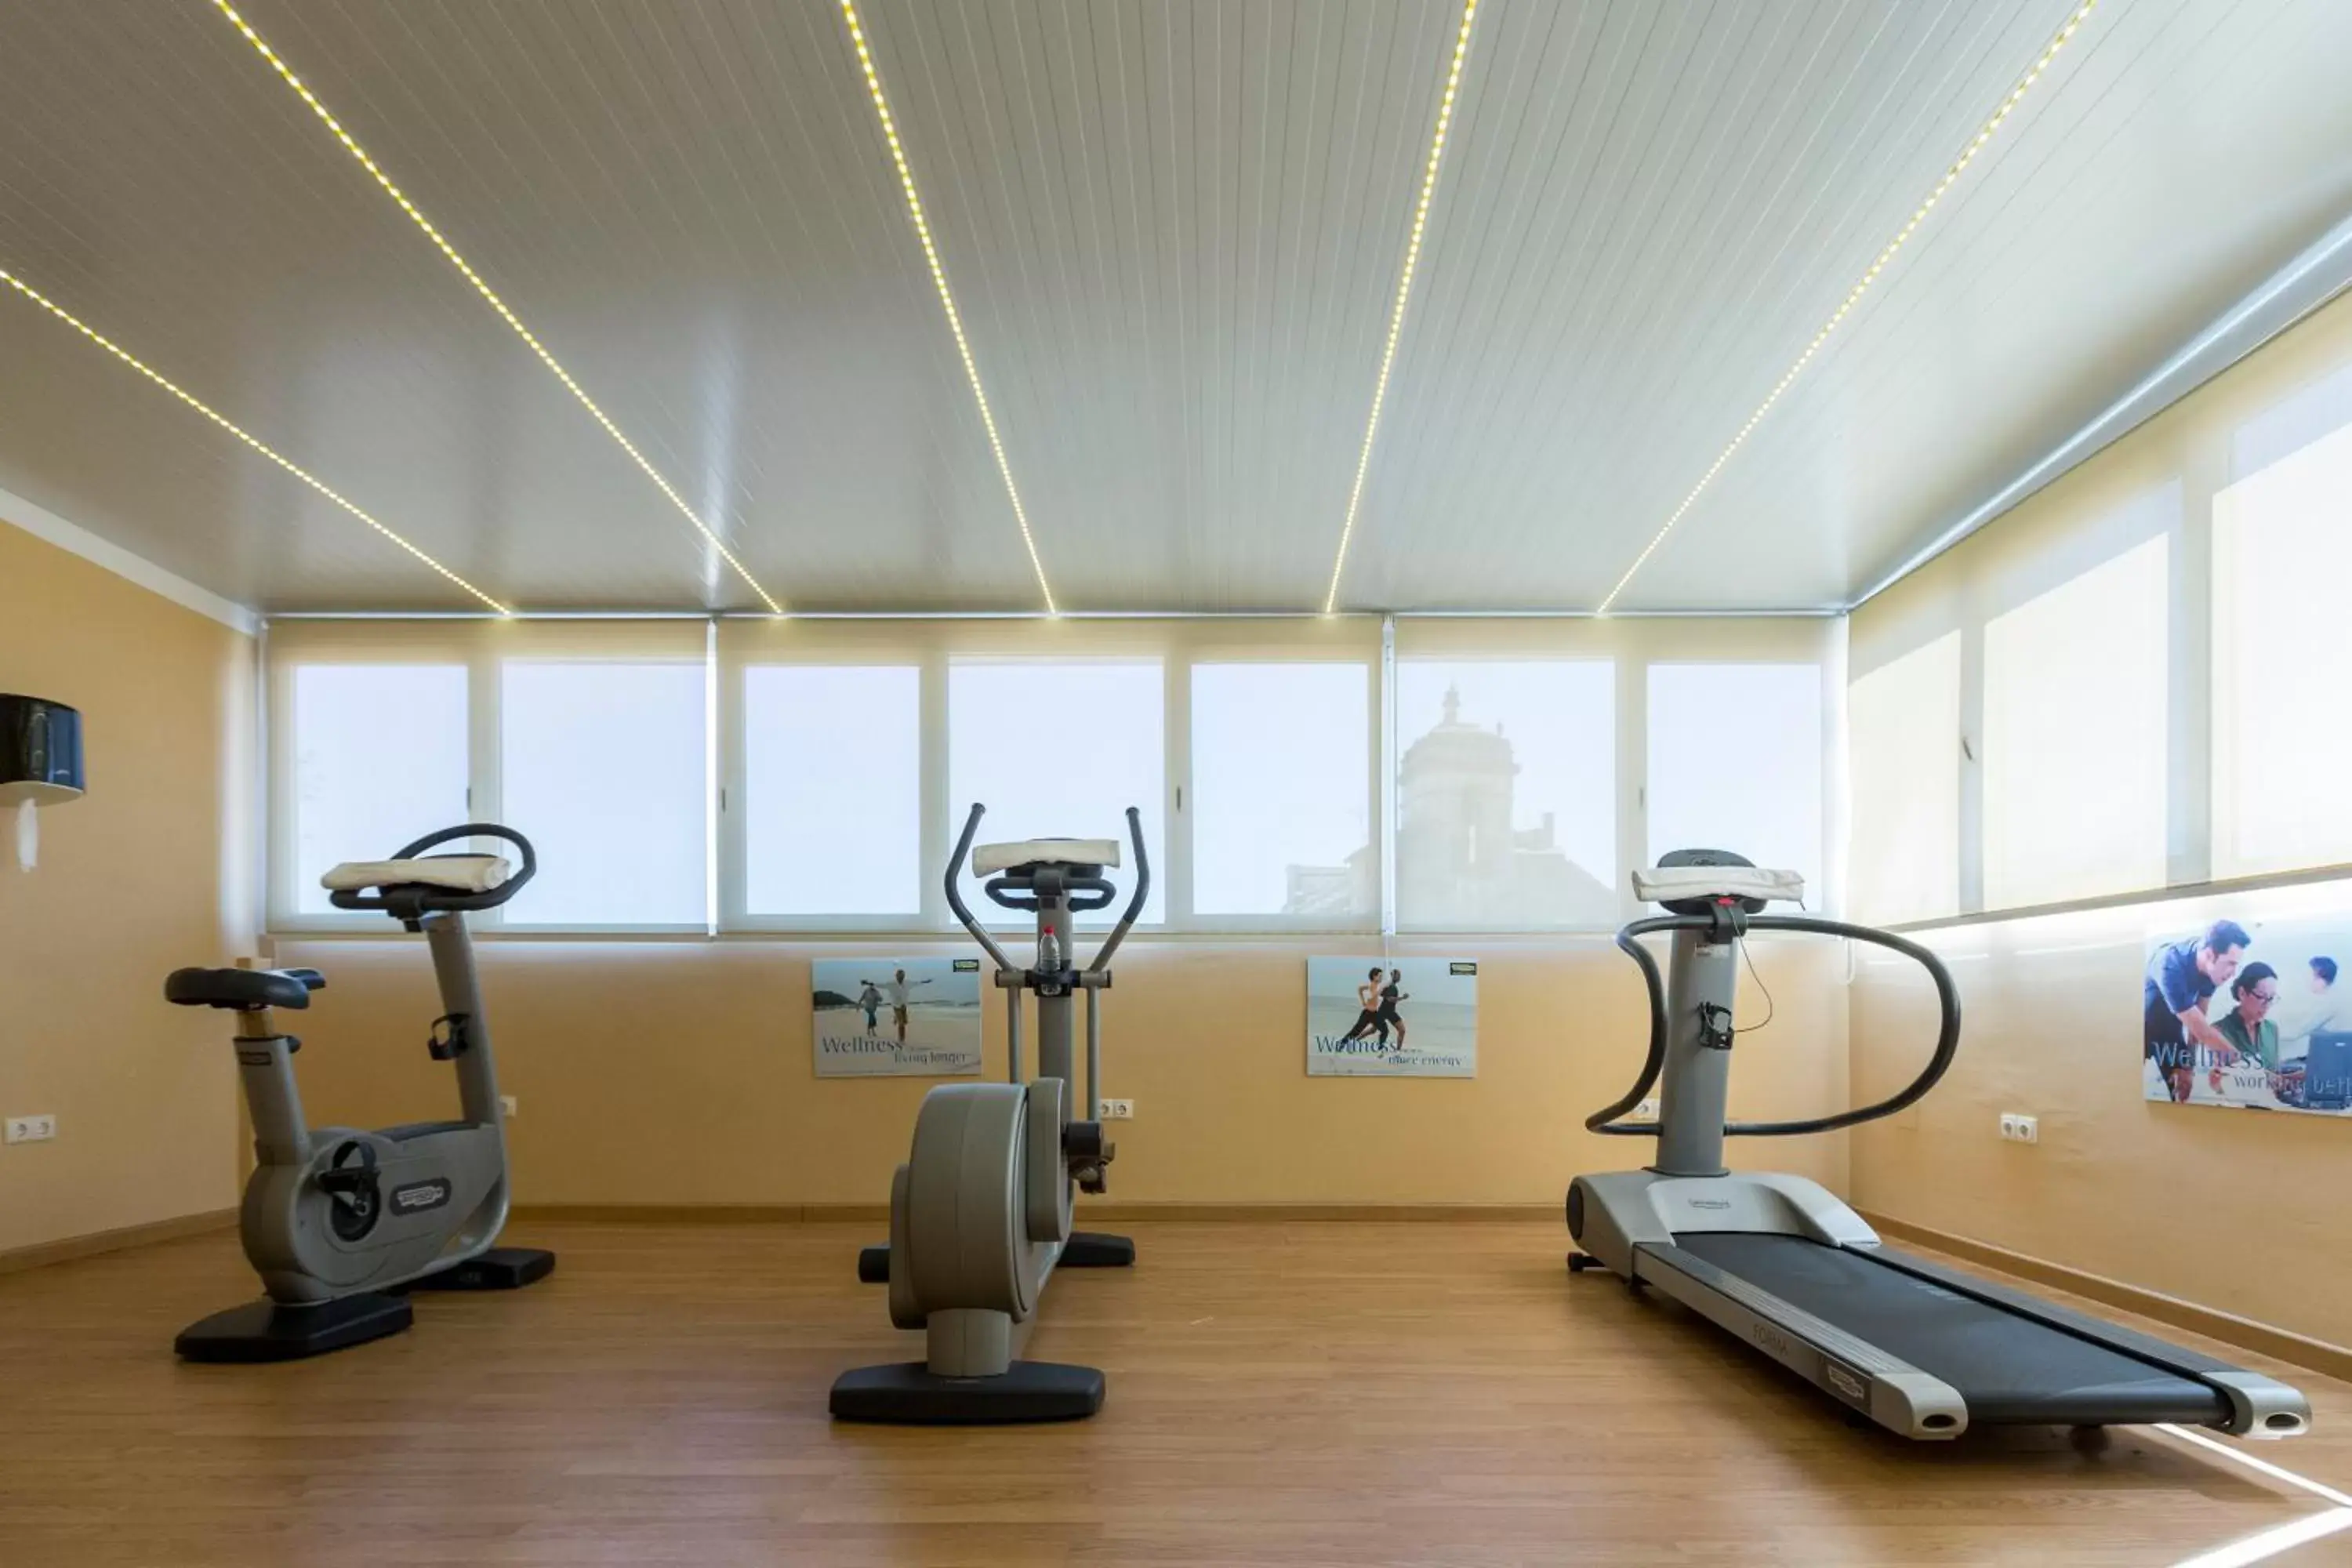 Fitness centre/facilities in Macia Alfaros